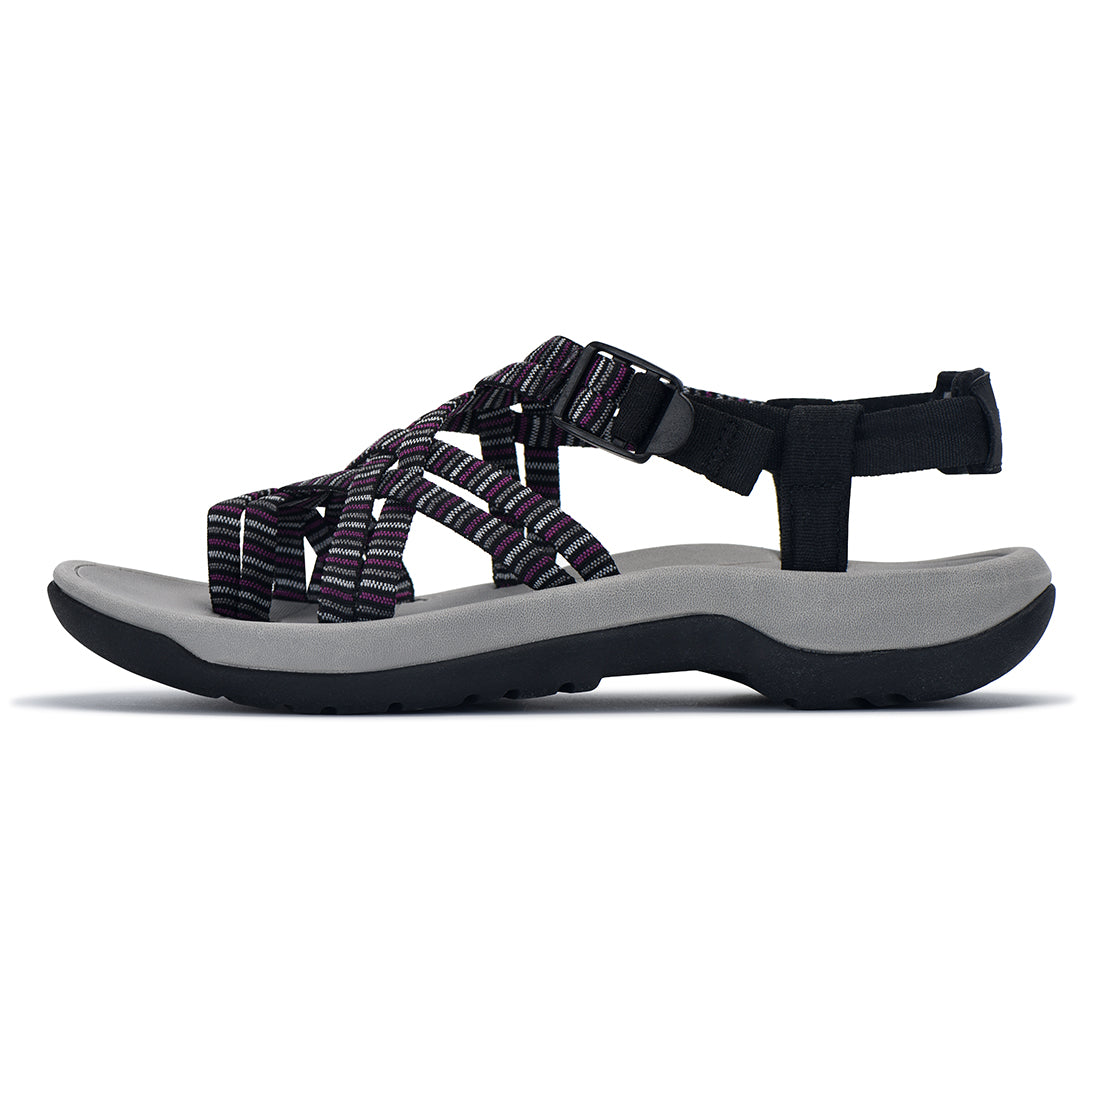 Viakix: Top-Rated Women's Walking Sandals - Comfort, Style & Support